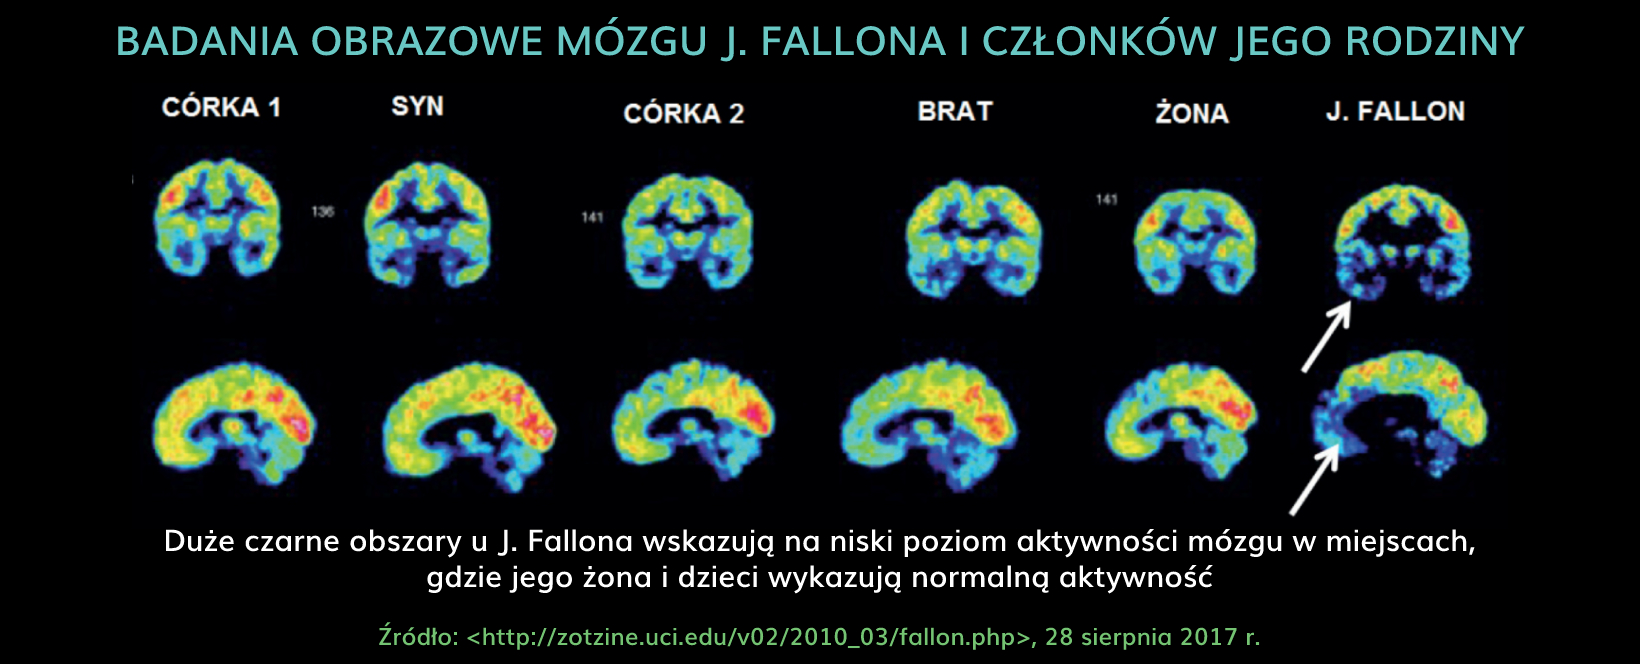 mozg_psychopaty_-_badania_obrazowe_mozgu_j.fallona.jpg